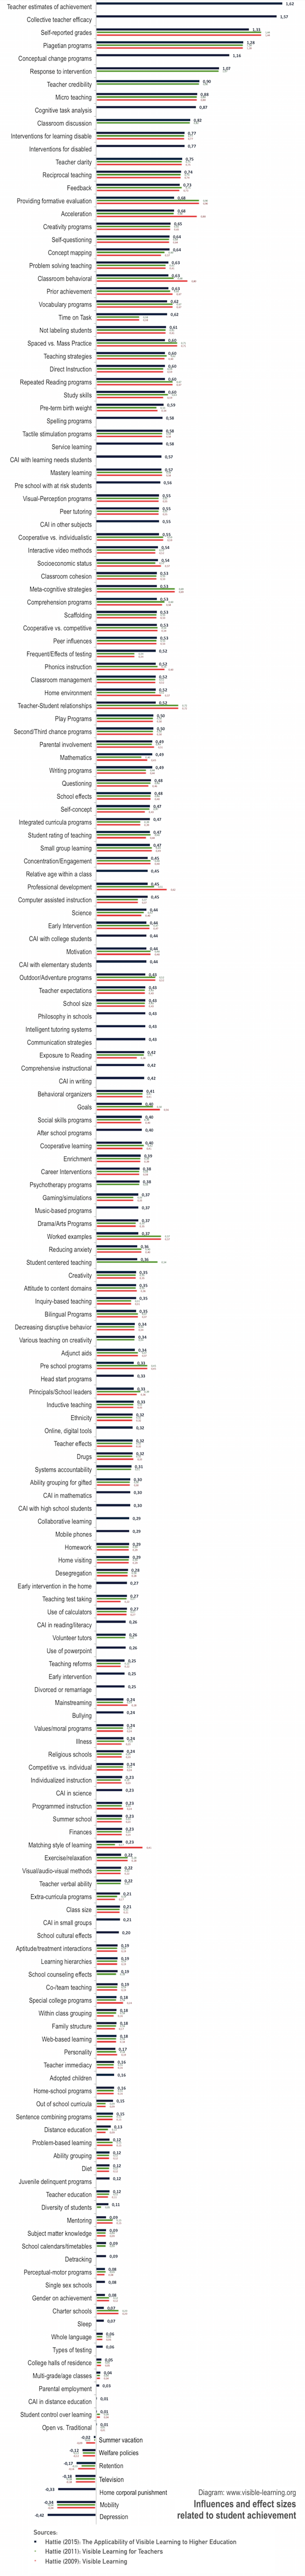 hattie-ranking-influences-effect-sizes-student-achievement-rangliste-updated-2009-2011-2015-new-web.png